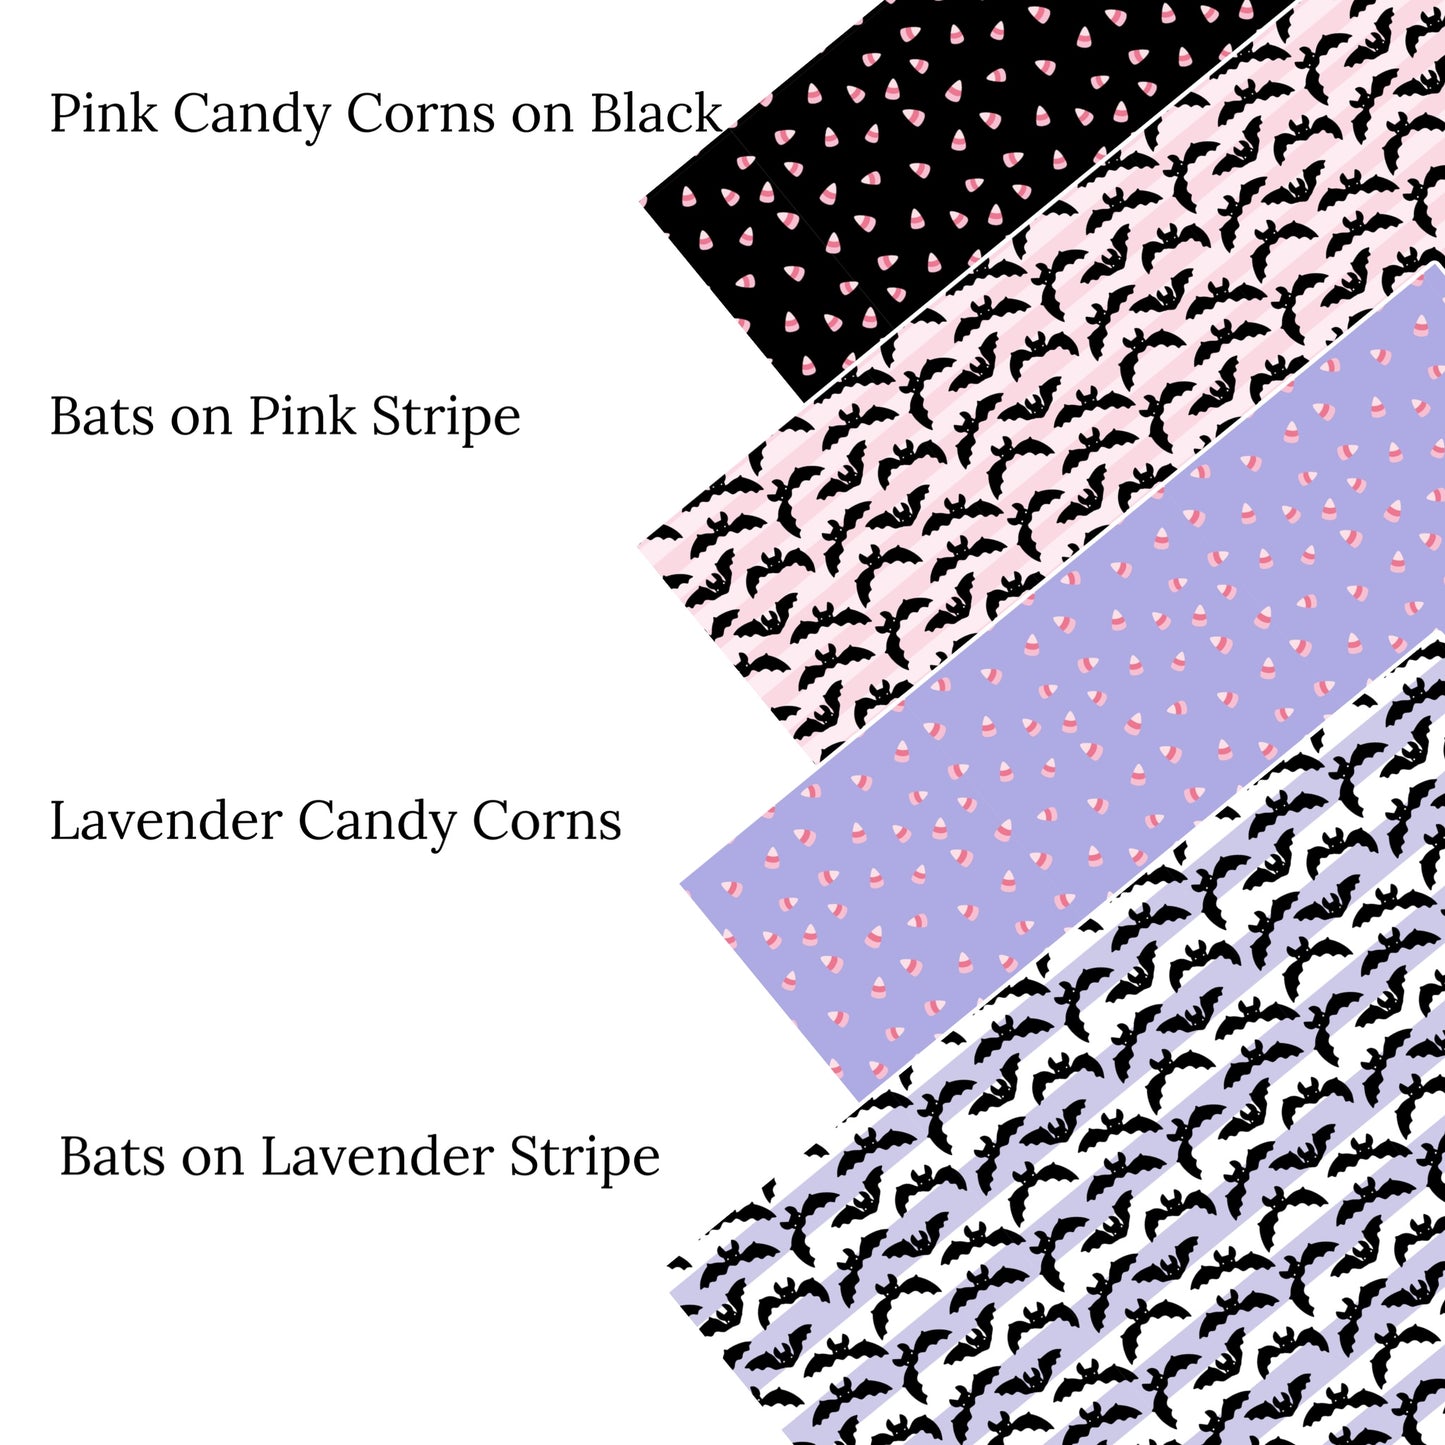 Bats on Lavender Stripe Faux Leather Sheets